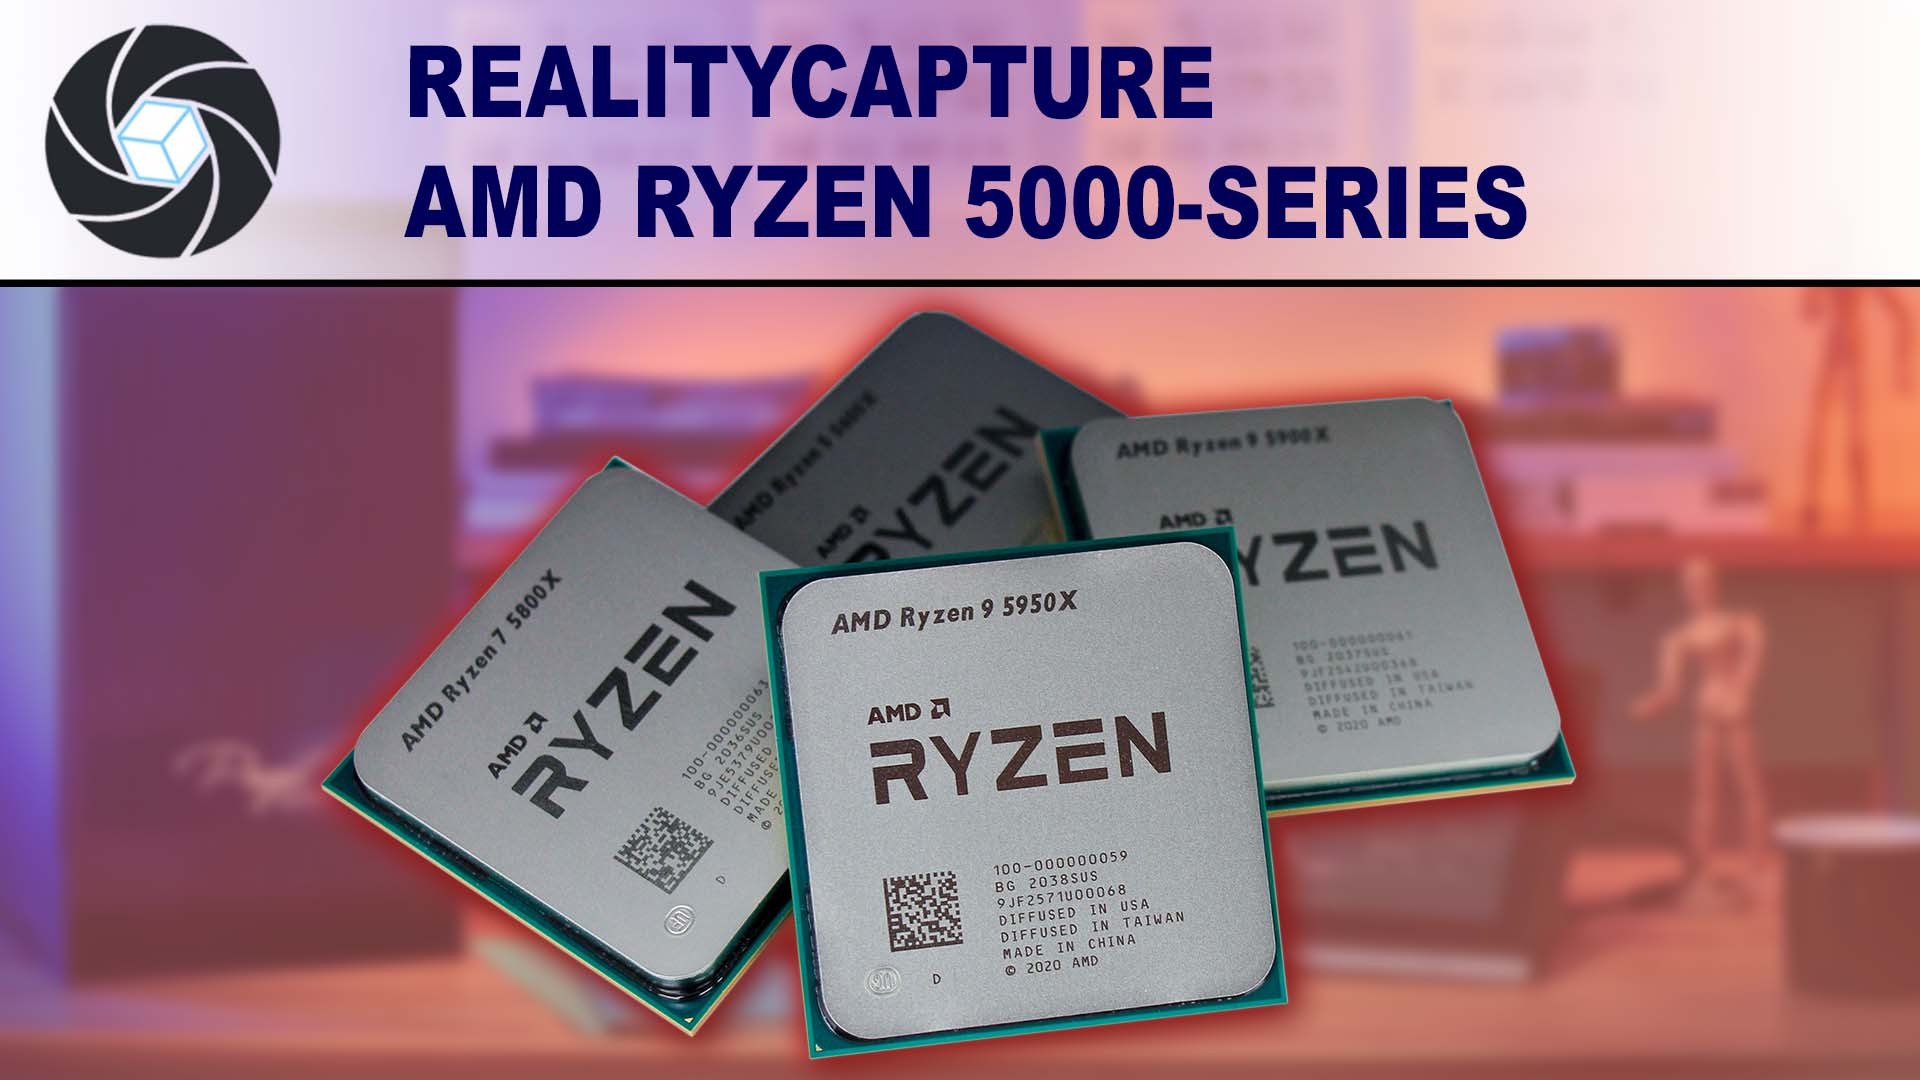 RealityCapture AMD Ryzen 5000 Series